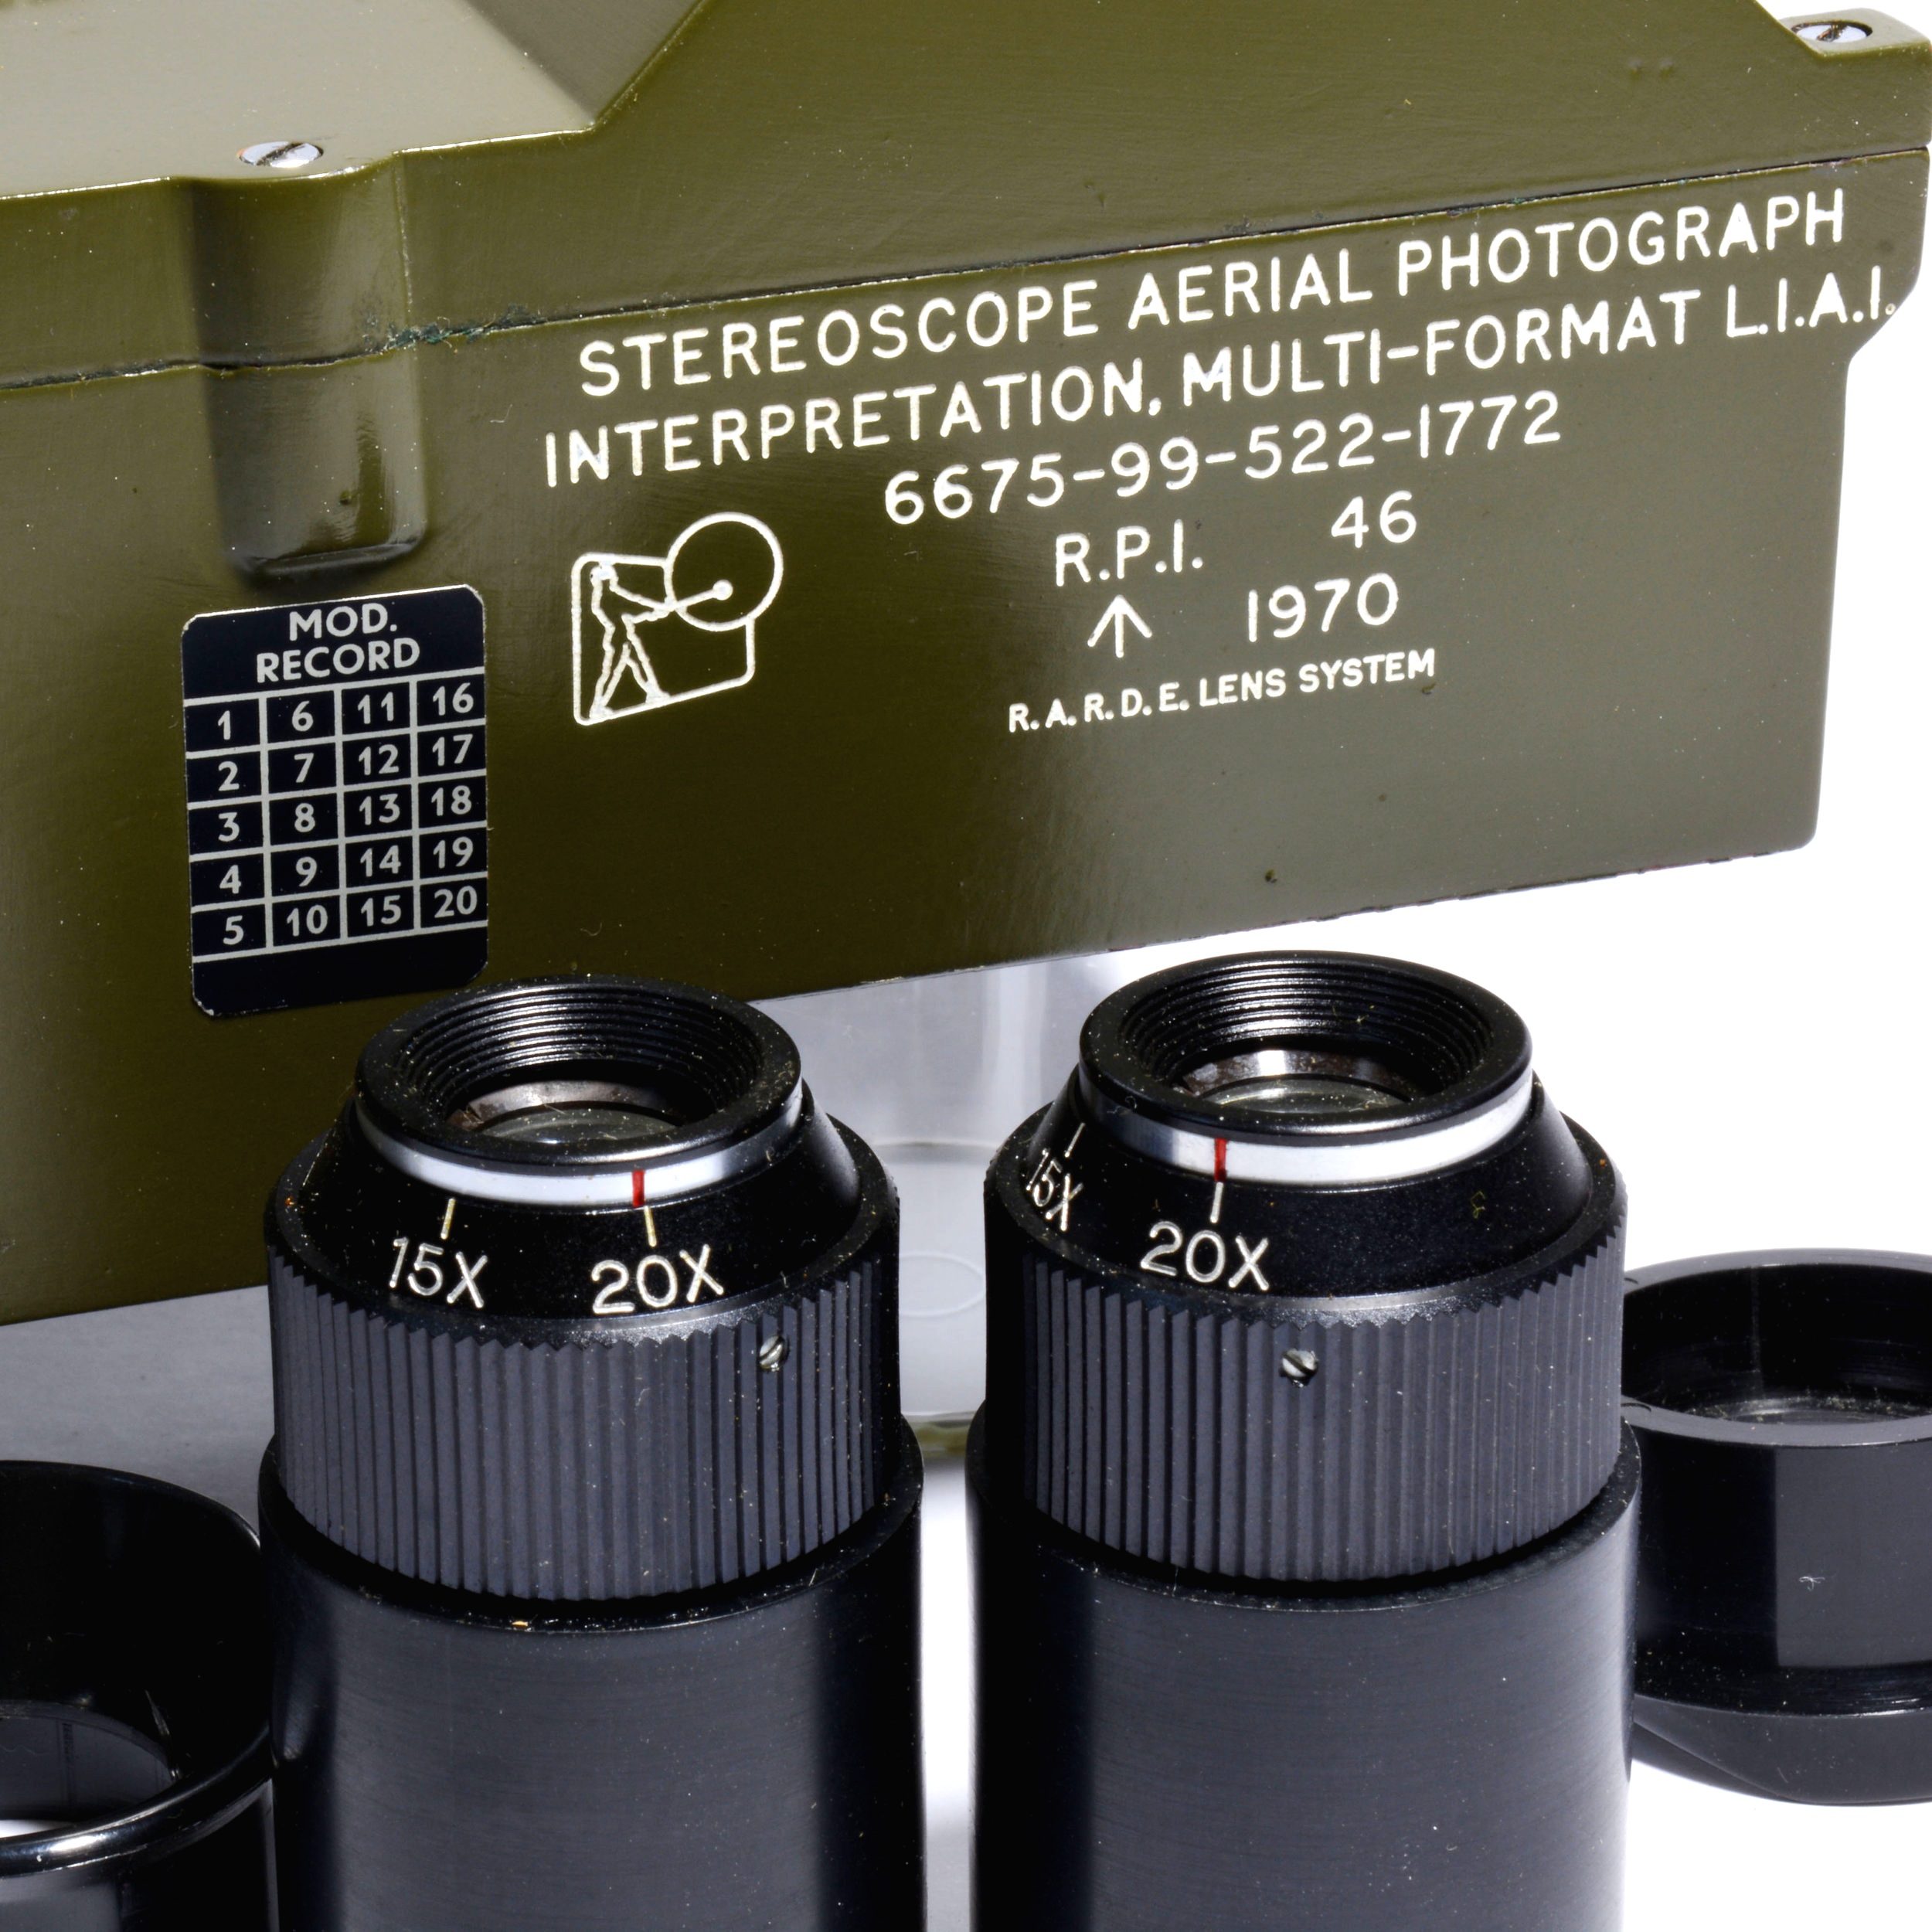 Stereoscope for air photo interpretation, makers marks